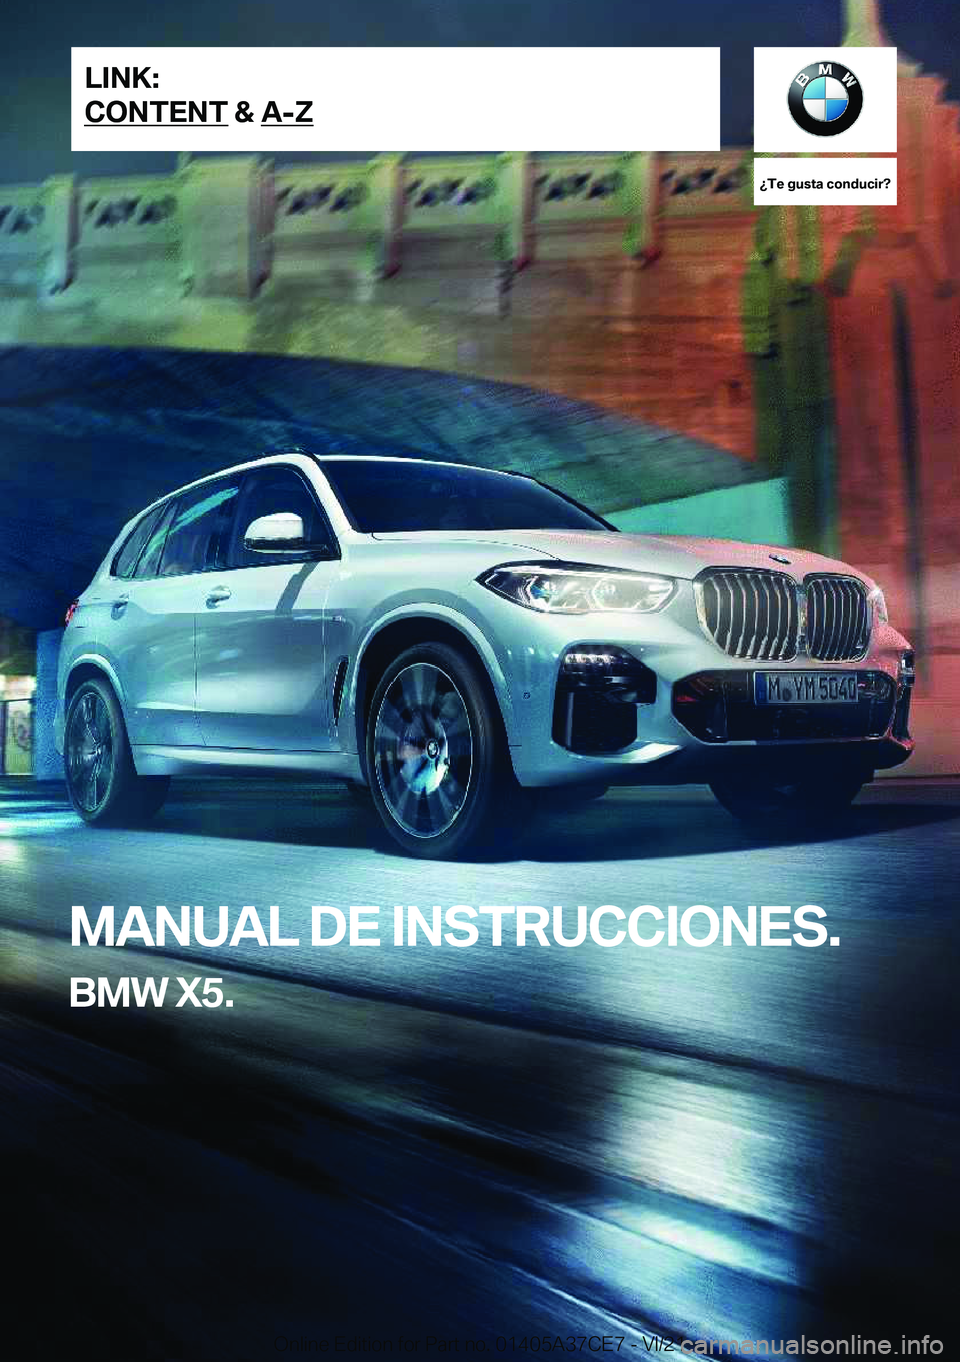 BMW X5 2022  Manuales de Empleo (in Spanish) ��T�e��g�u�s�t�a��c�o�n�d�u�c�i�r� 
�M�A�N�U�A�L��D�E��I�N�S�T�R�U�C�C�I�O�N�E�S�.
�B�M�W��X�5�.�L�I�N�K�:
�C�O�N�T�E�N�T��&��A�-�Z�O�n�l�i�n�e��E�d�i�t�i�o�n��f�o�r��P�a�r�t��n�o�.��0�1�